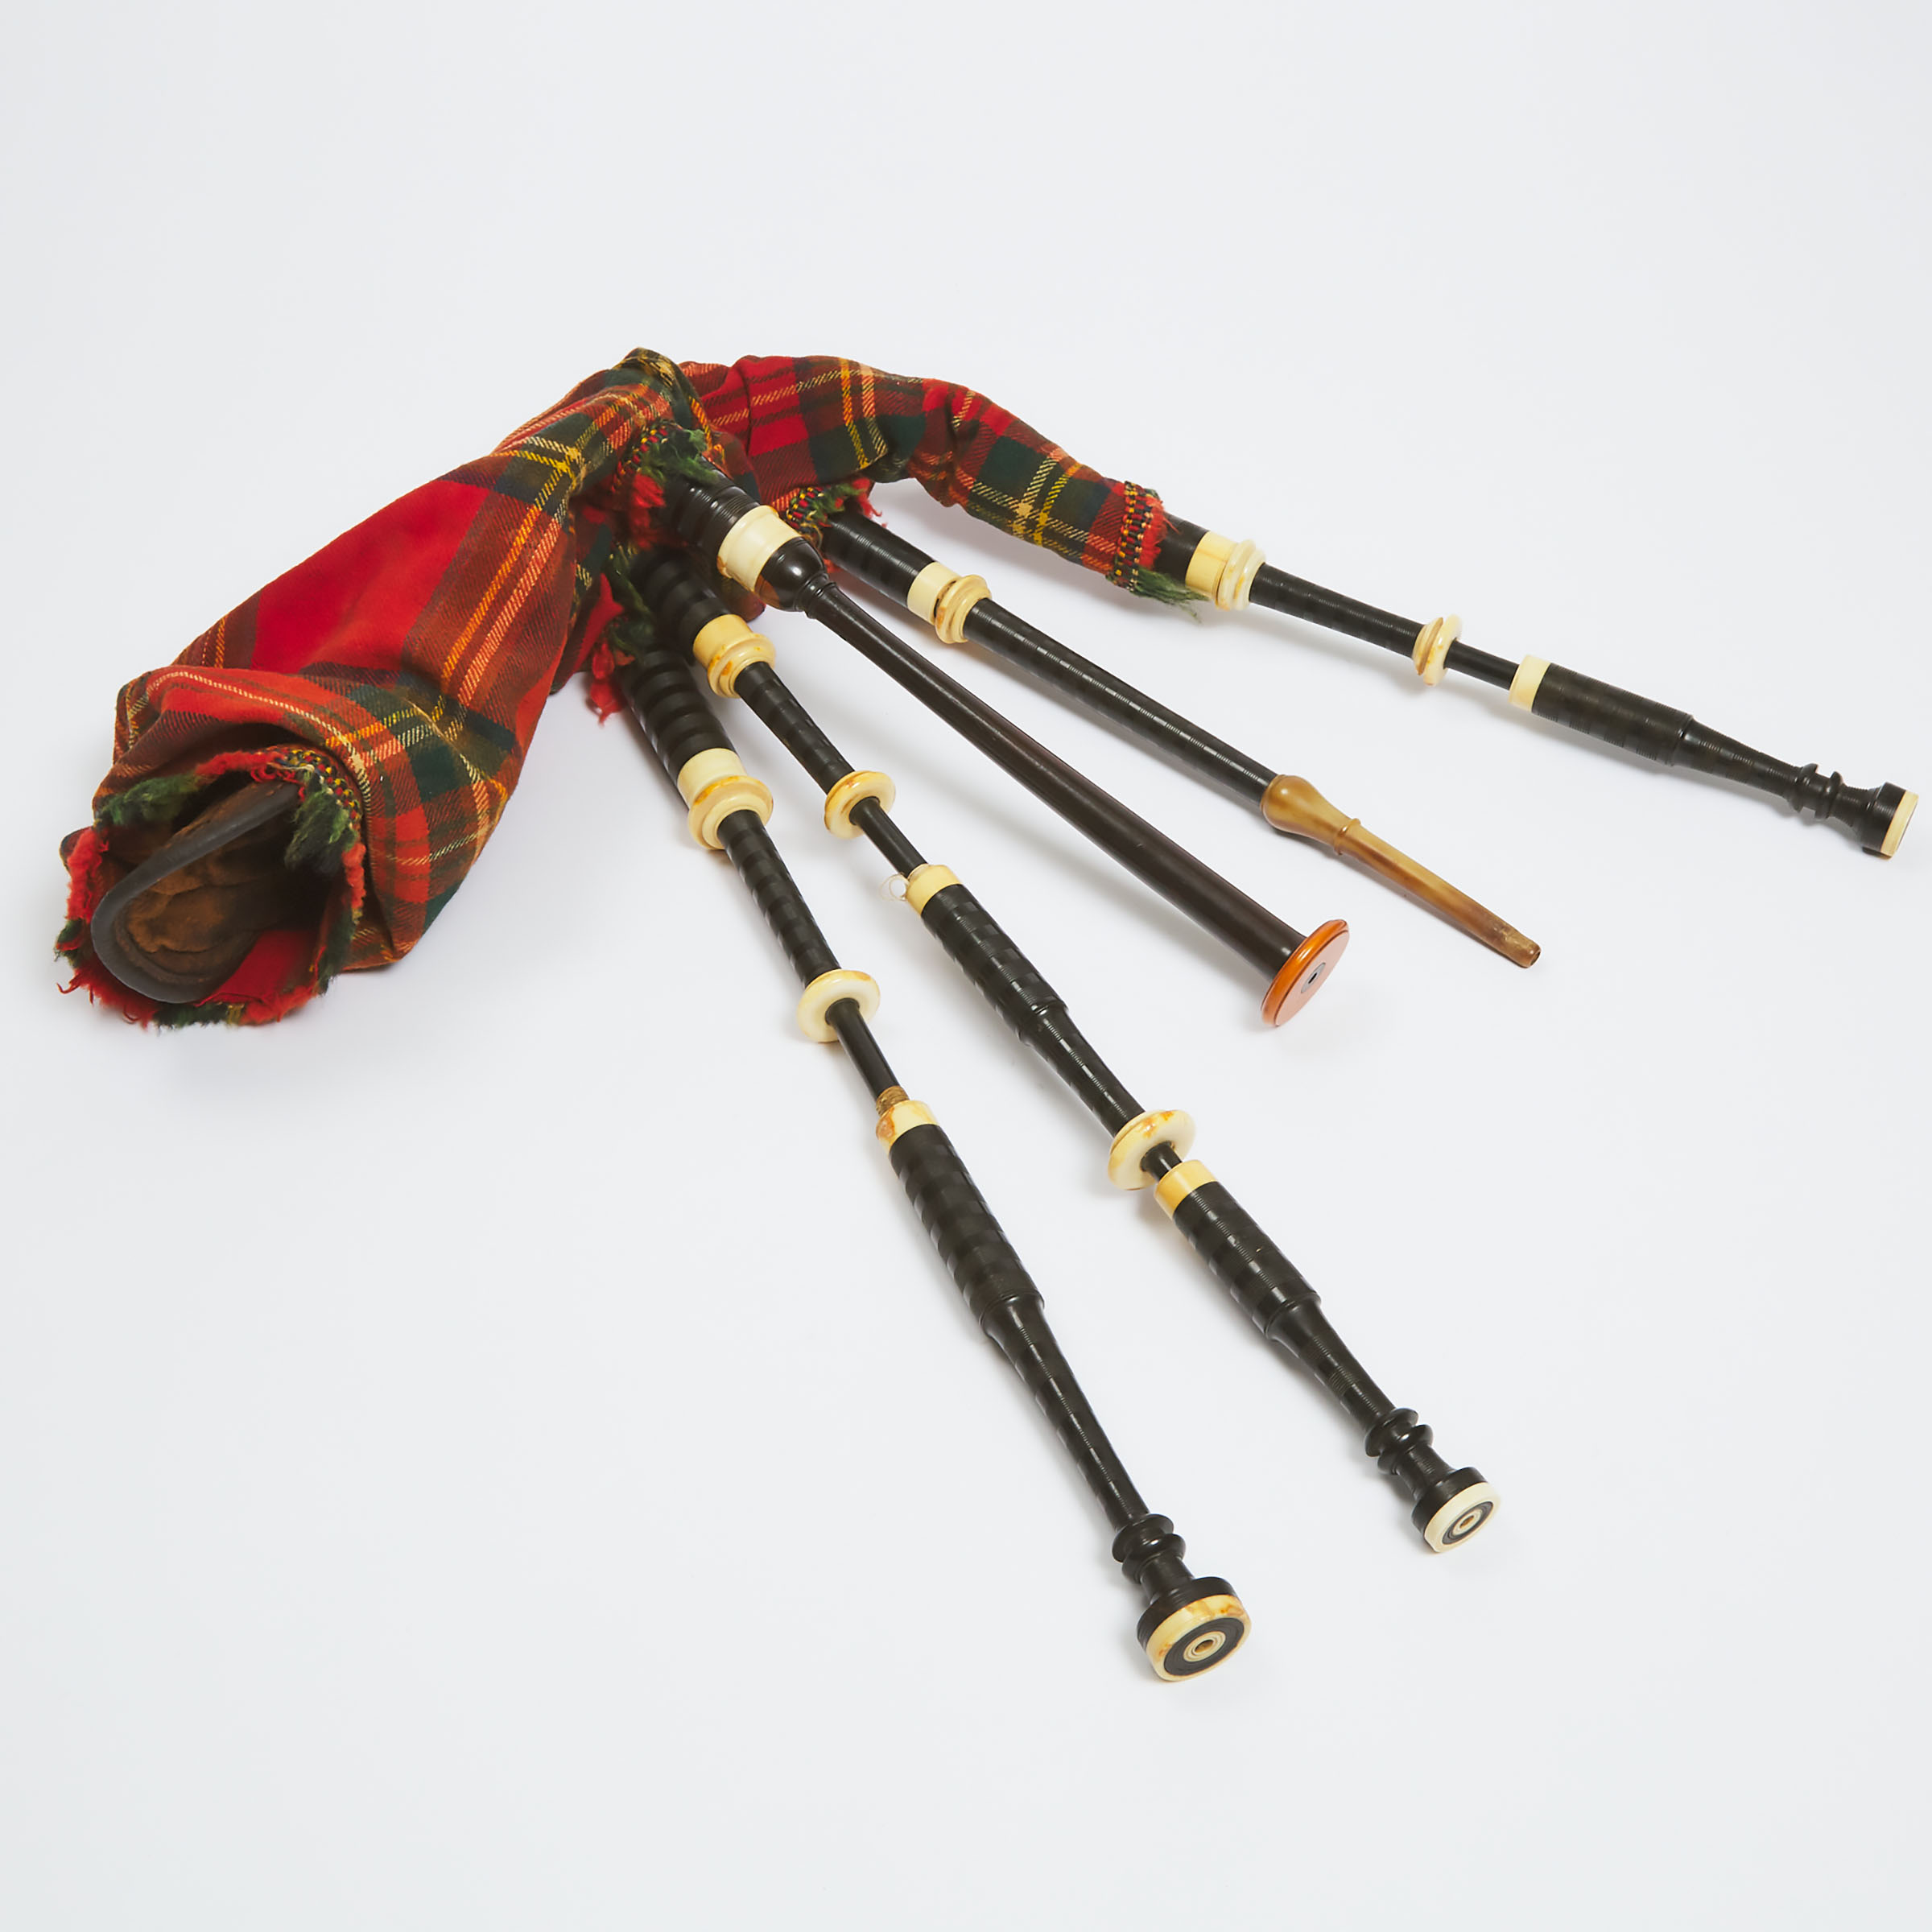 Set of Ivory Mounted Ebony Reel Pipes (Small Bagpipes), Sinclair-MacPherson, Edinburgh, Scotland, mid 20th century